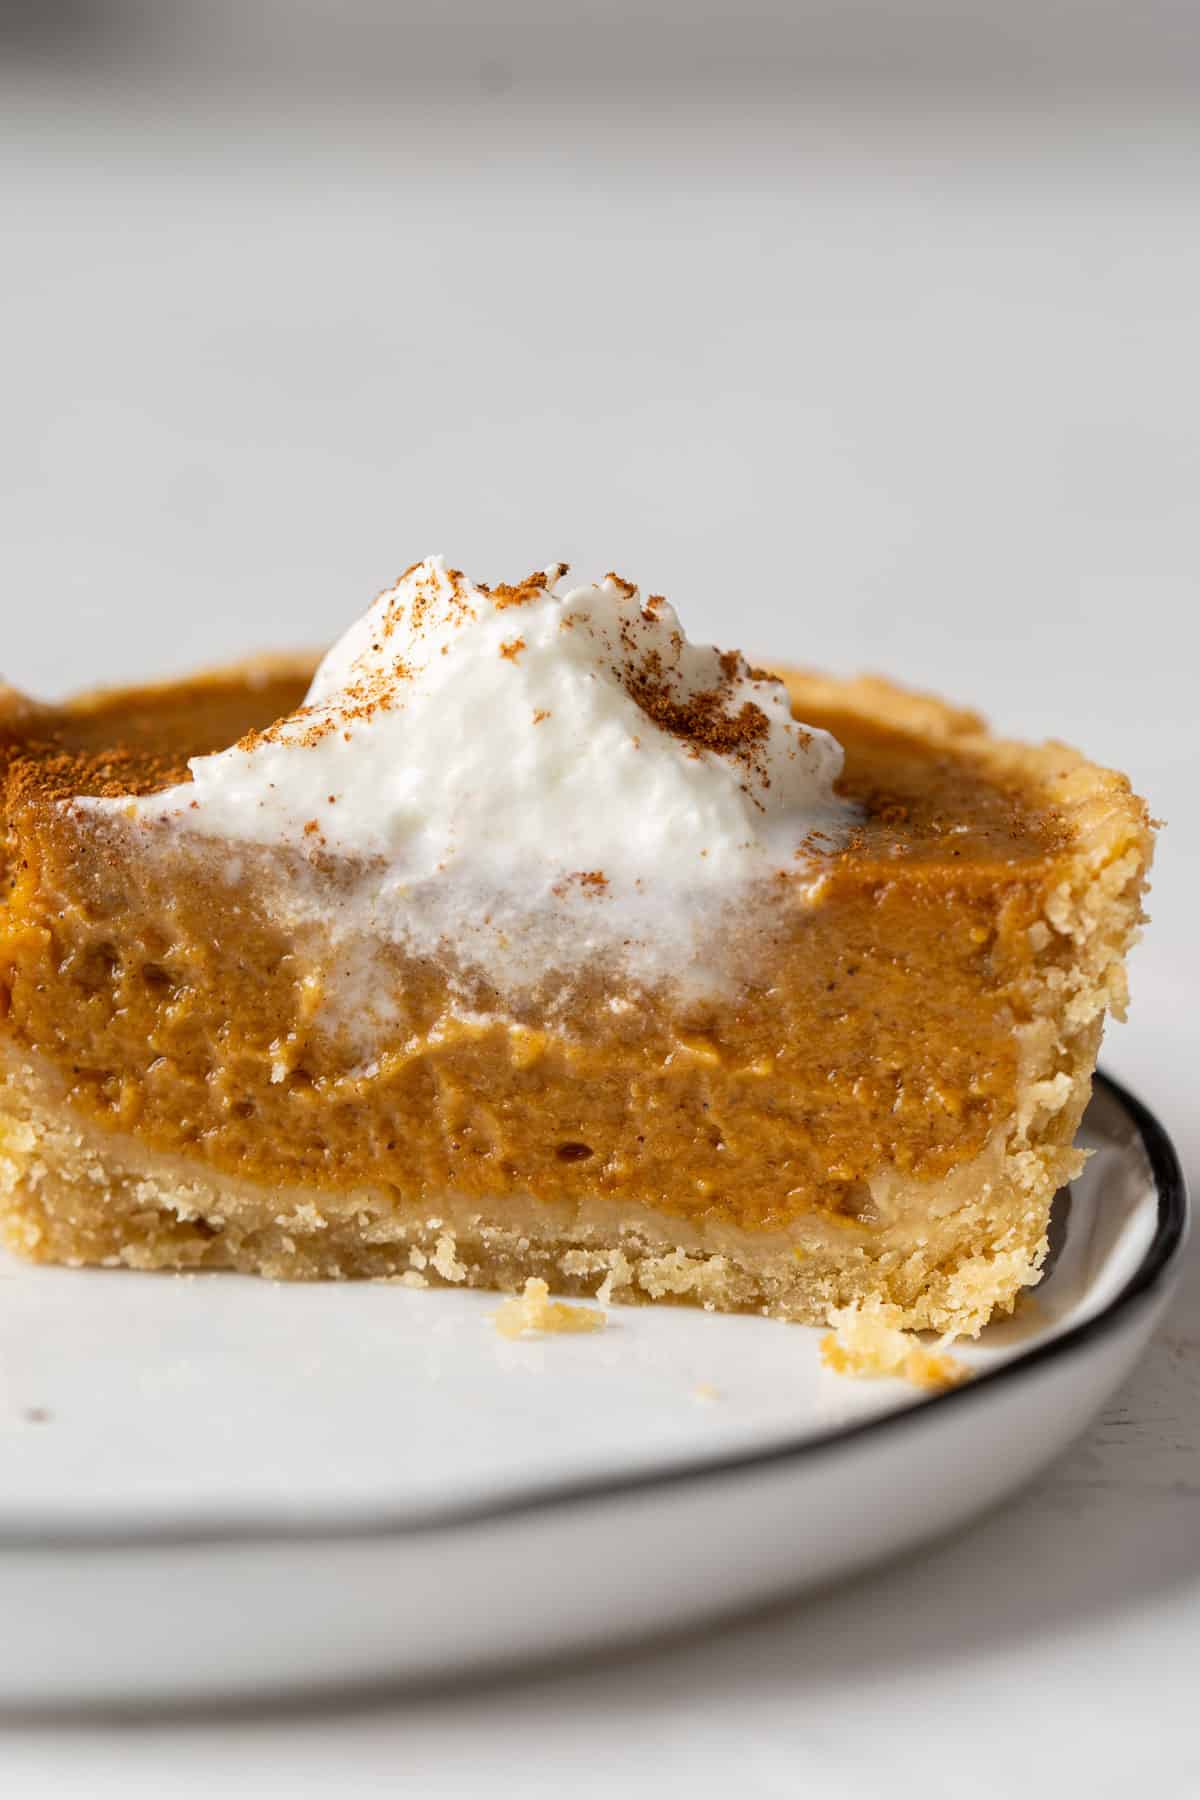 Inside texture of a mini pumpkin pie.